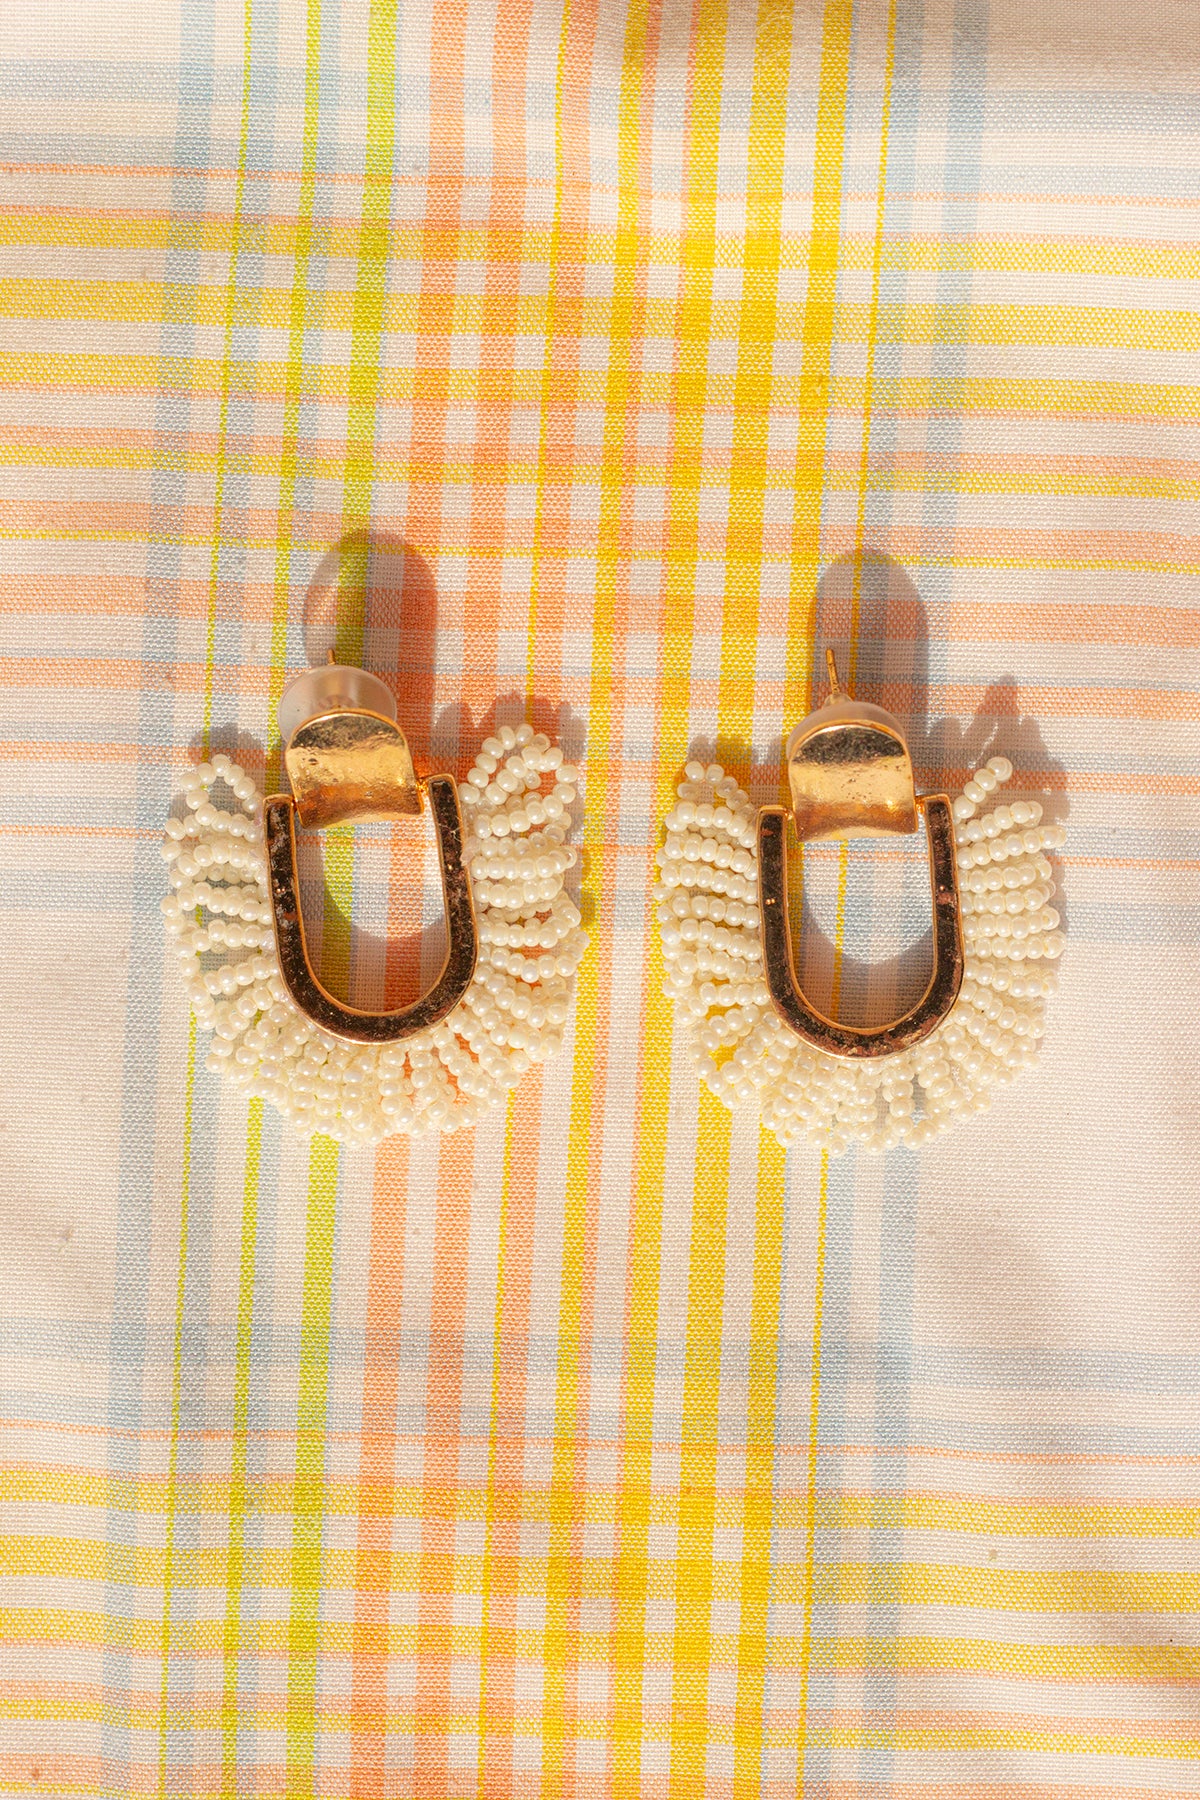 Horse Shoe Cut Out Beaded Earrings - Sugar + Style